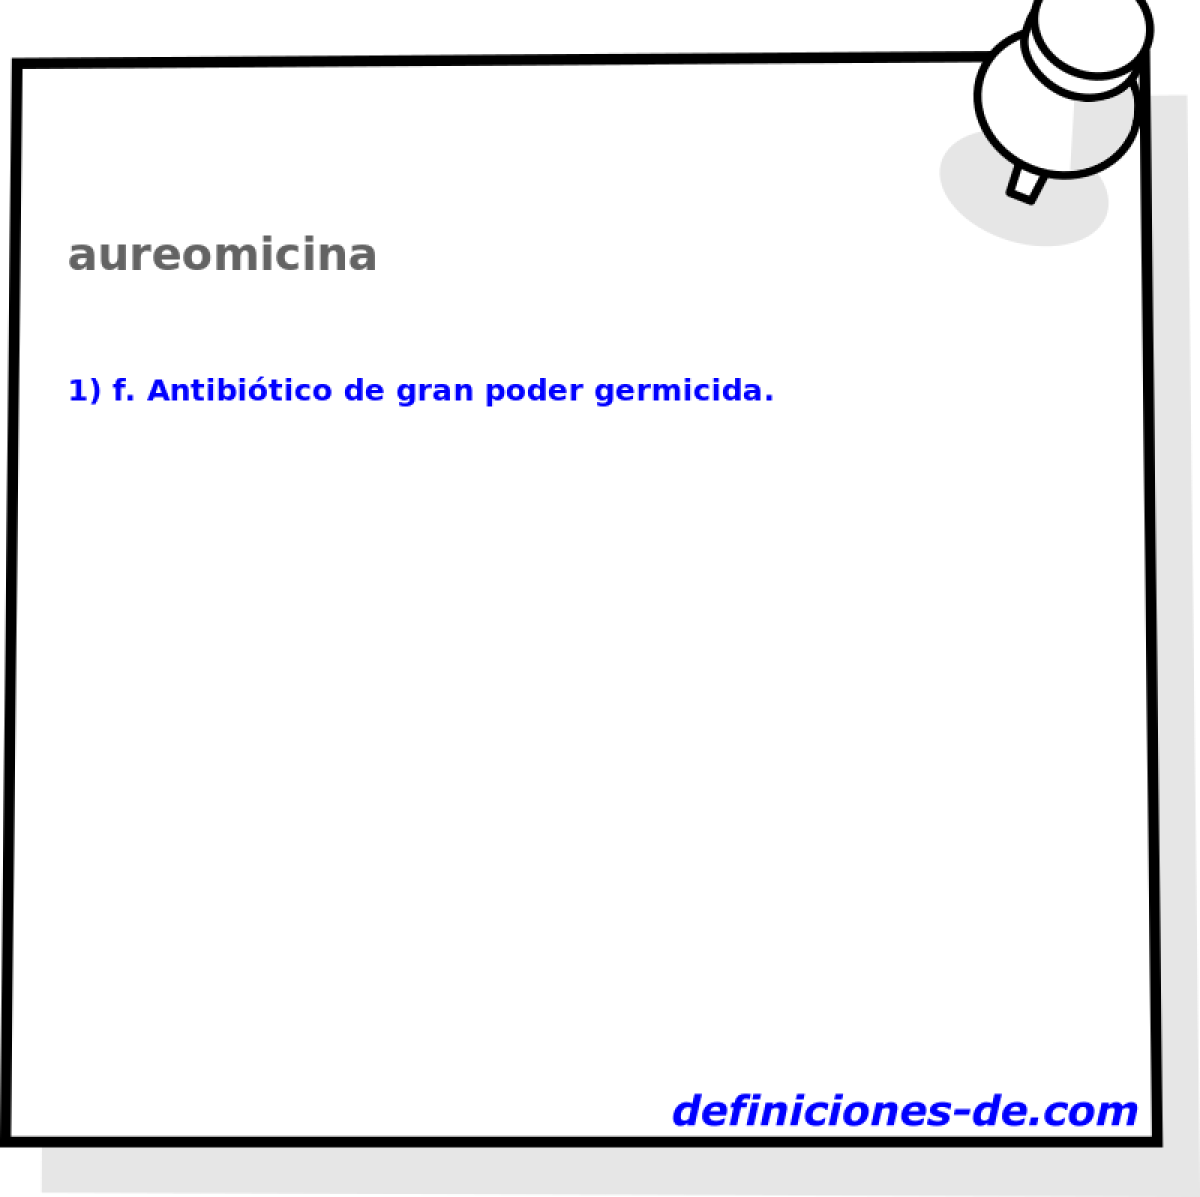 aureomicina 